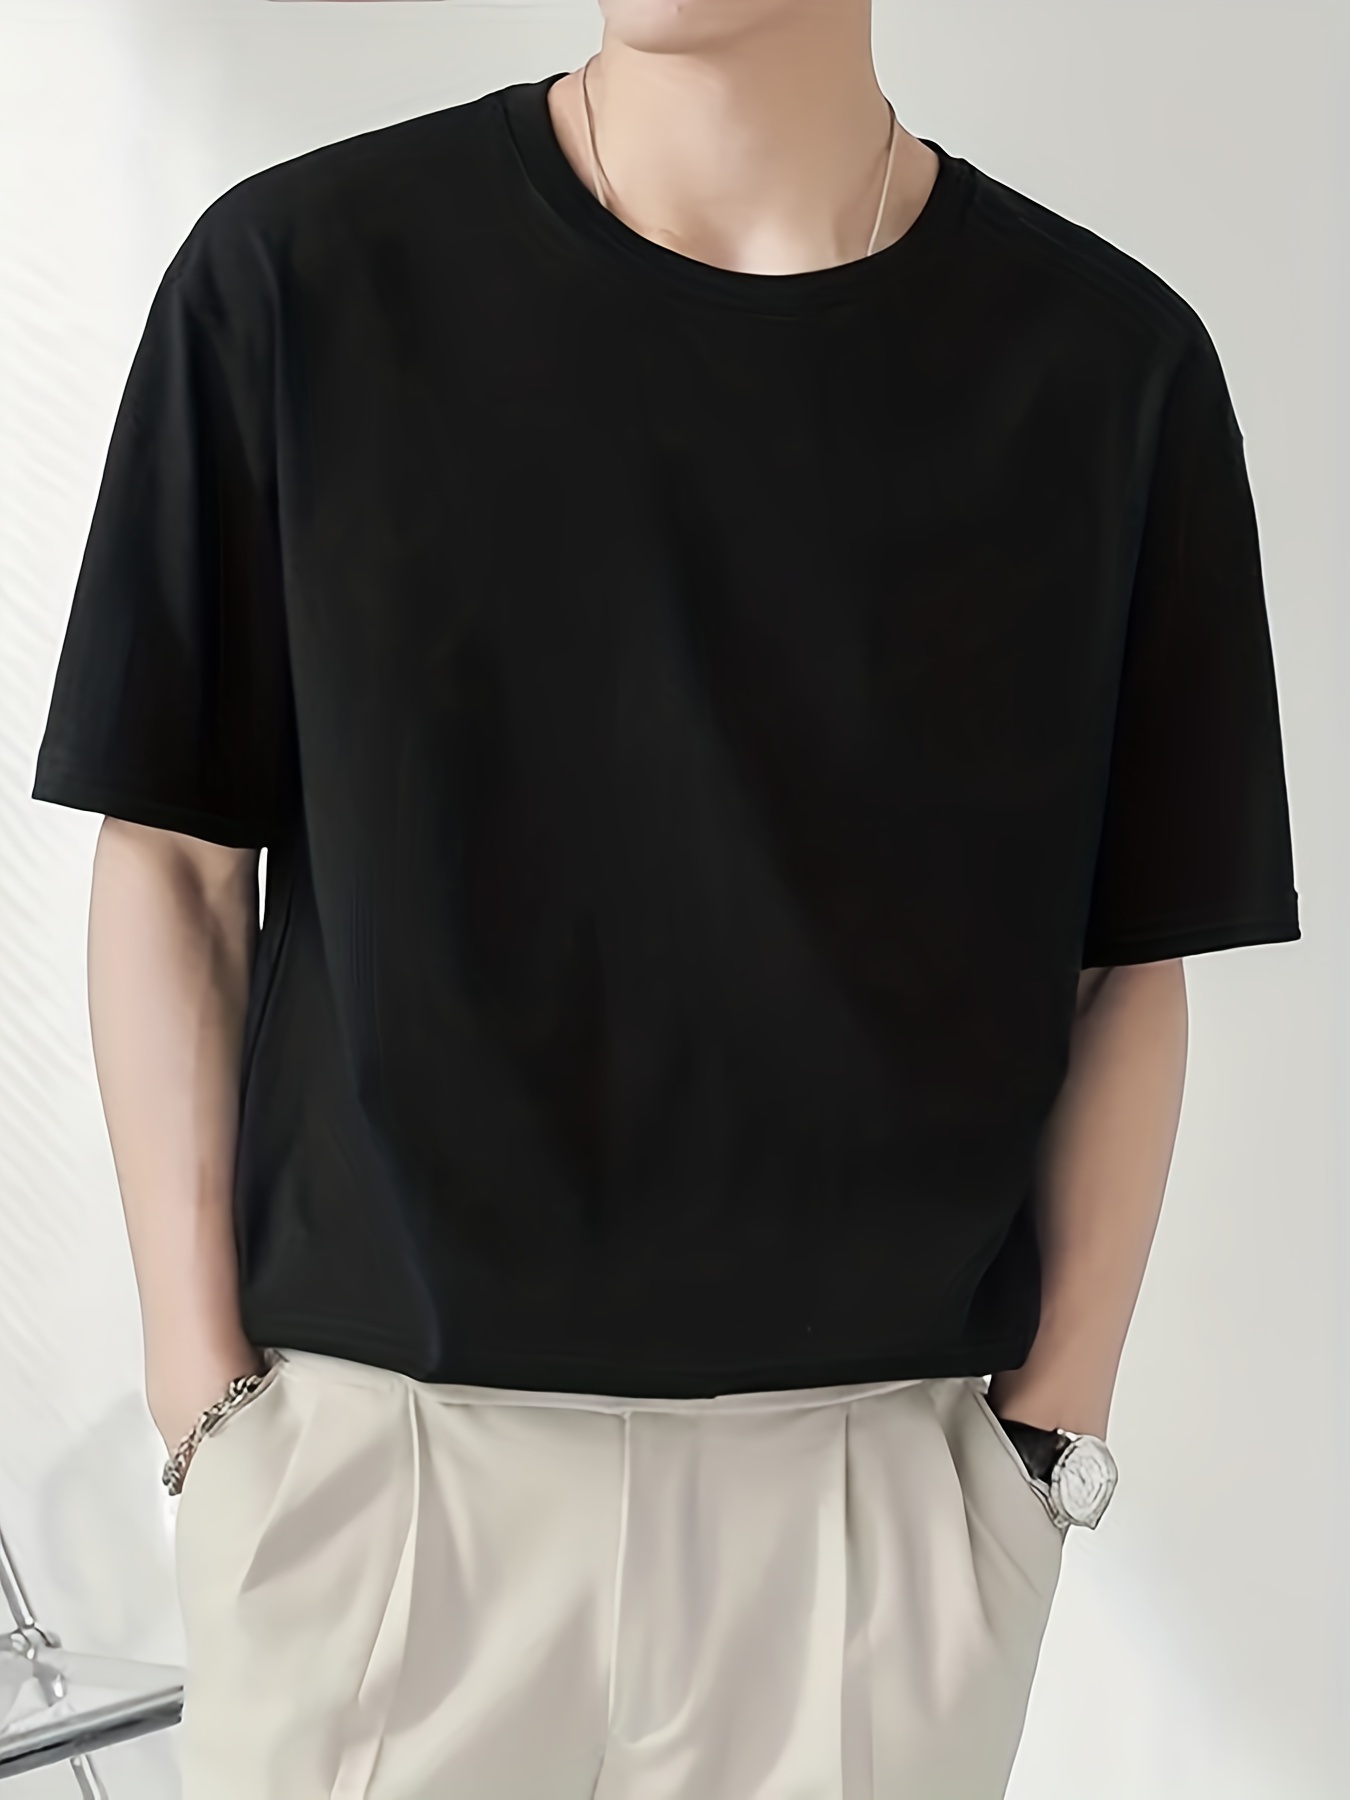 INCERUN Fashion Men Casual T Shirt Plain Cotton 3/4 Sleeve Crew